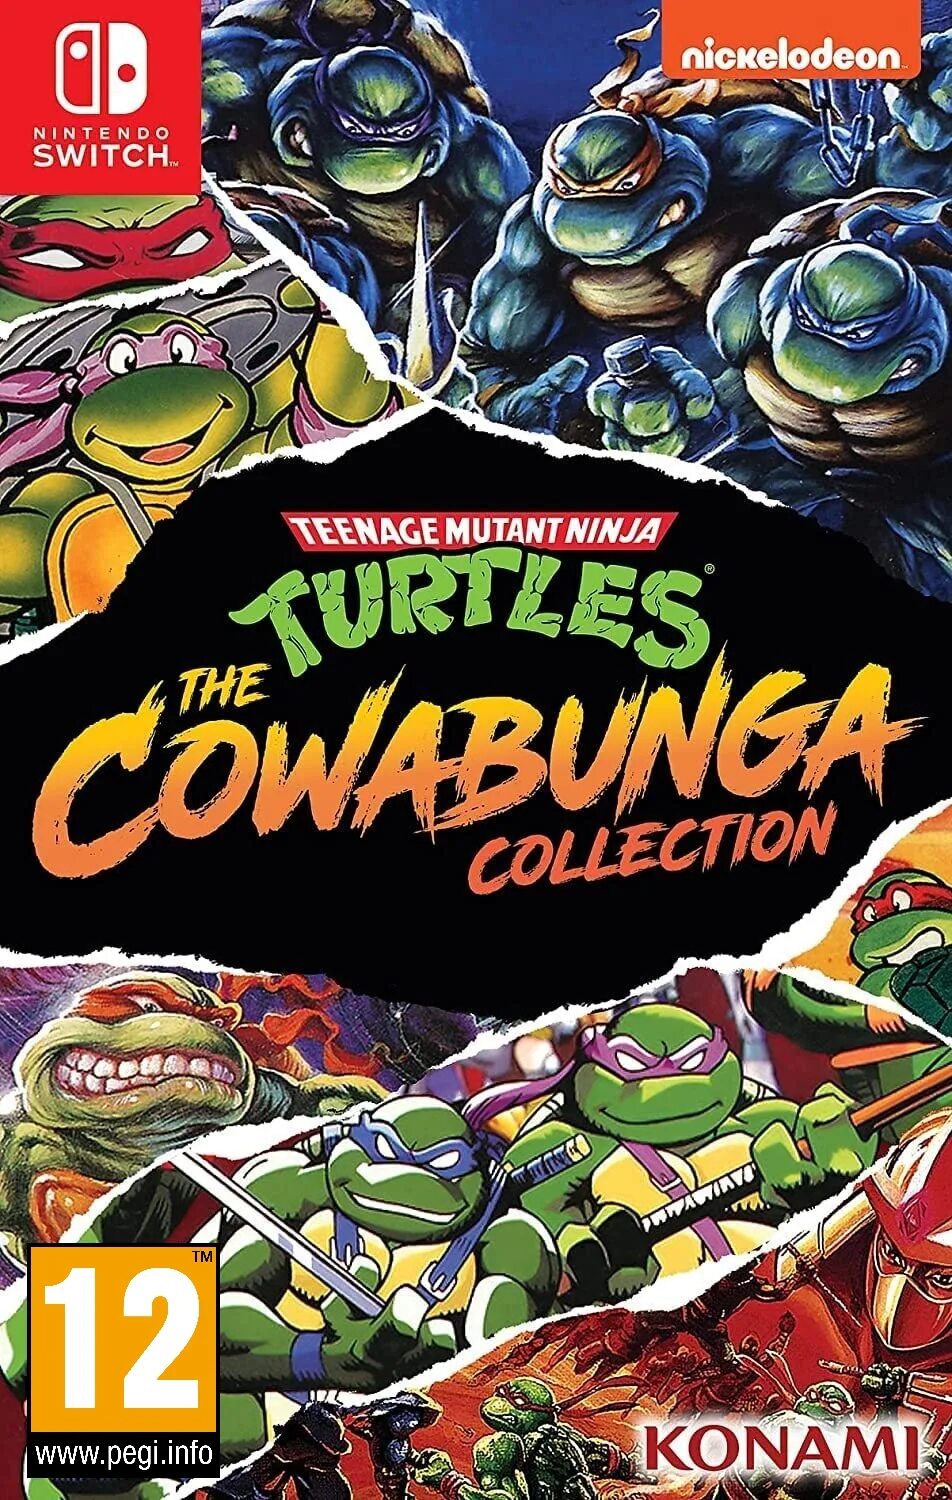 Нинтендо свитч ниндзя. TMNT: the Cowabunga collection на Nintendo Switch. Teenage Mutant Ninja Turtles: the Cowabunga. Черепашки ниндзя на Нинтендо свитч.